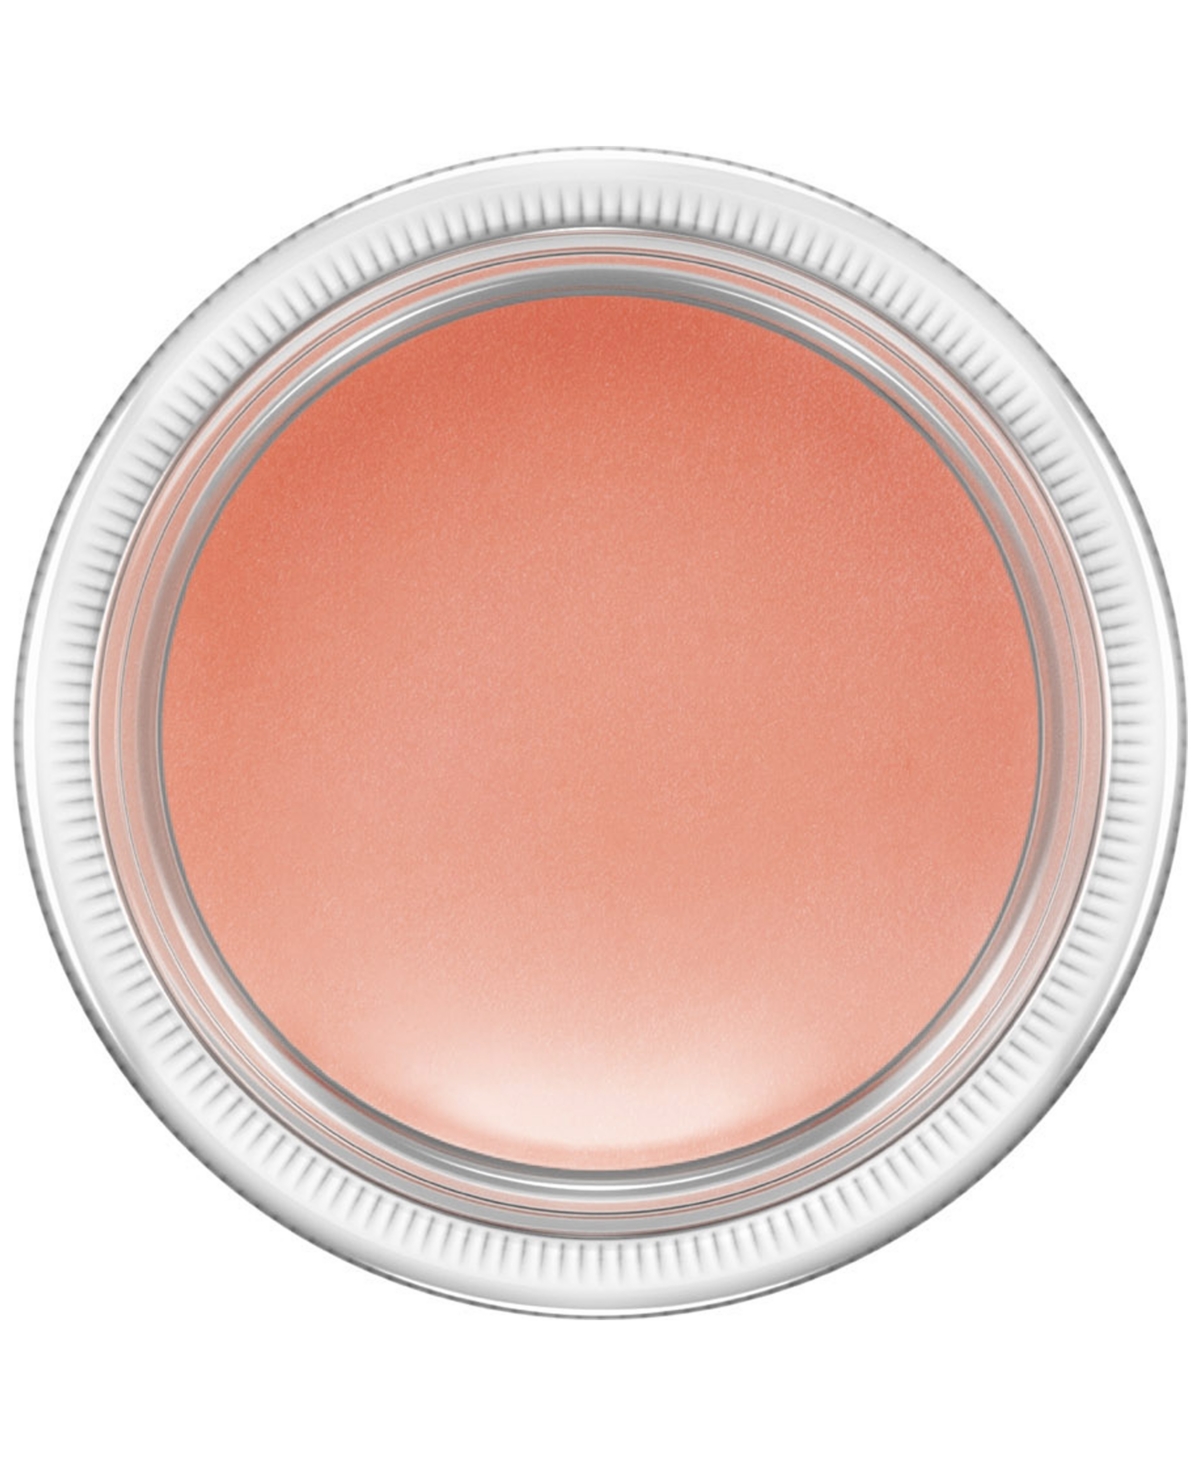 Mac Pro Longwear Paint Pot In Art Thera-peachy (soft Peach)